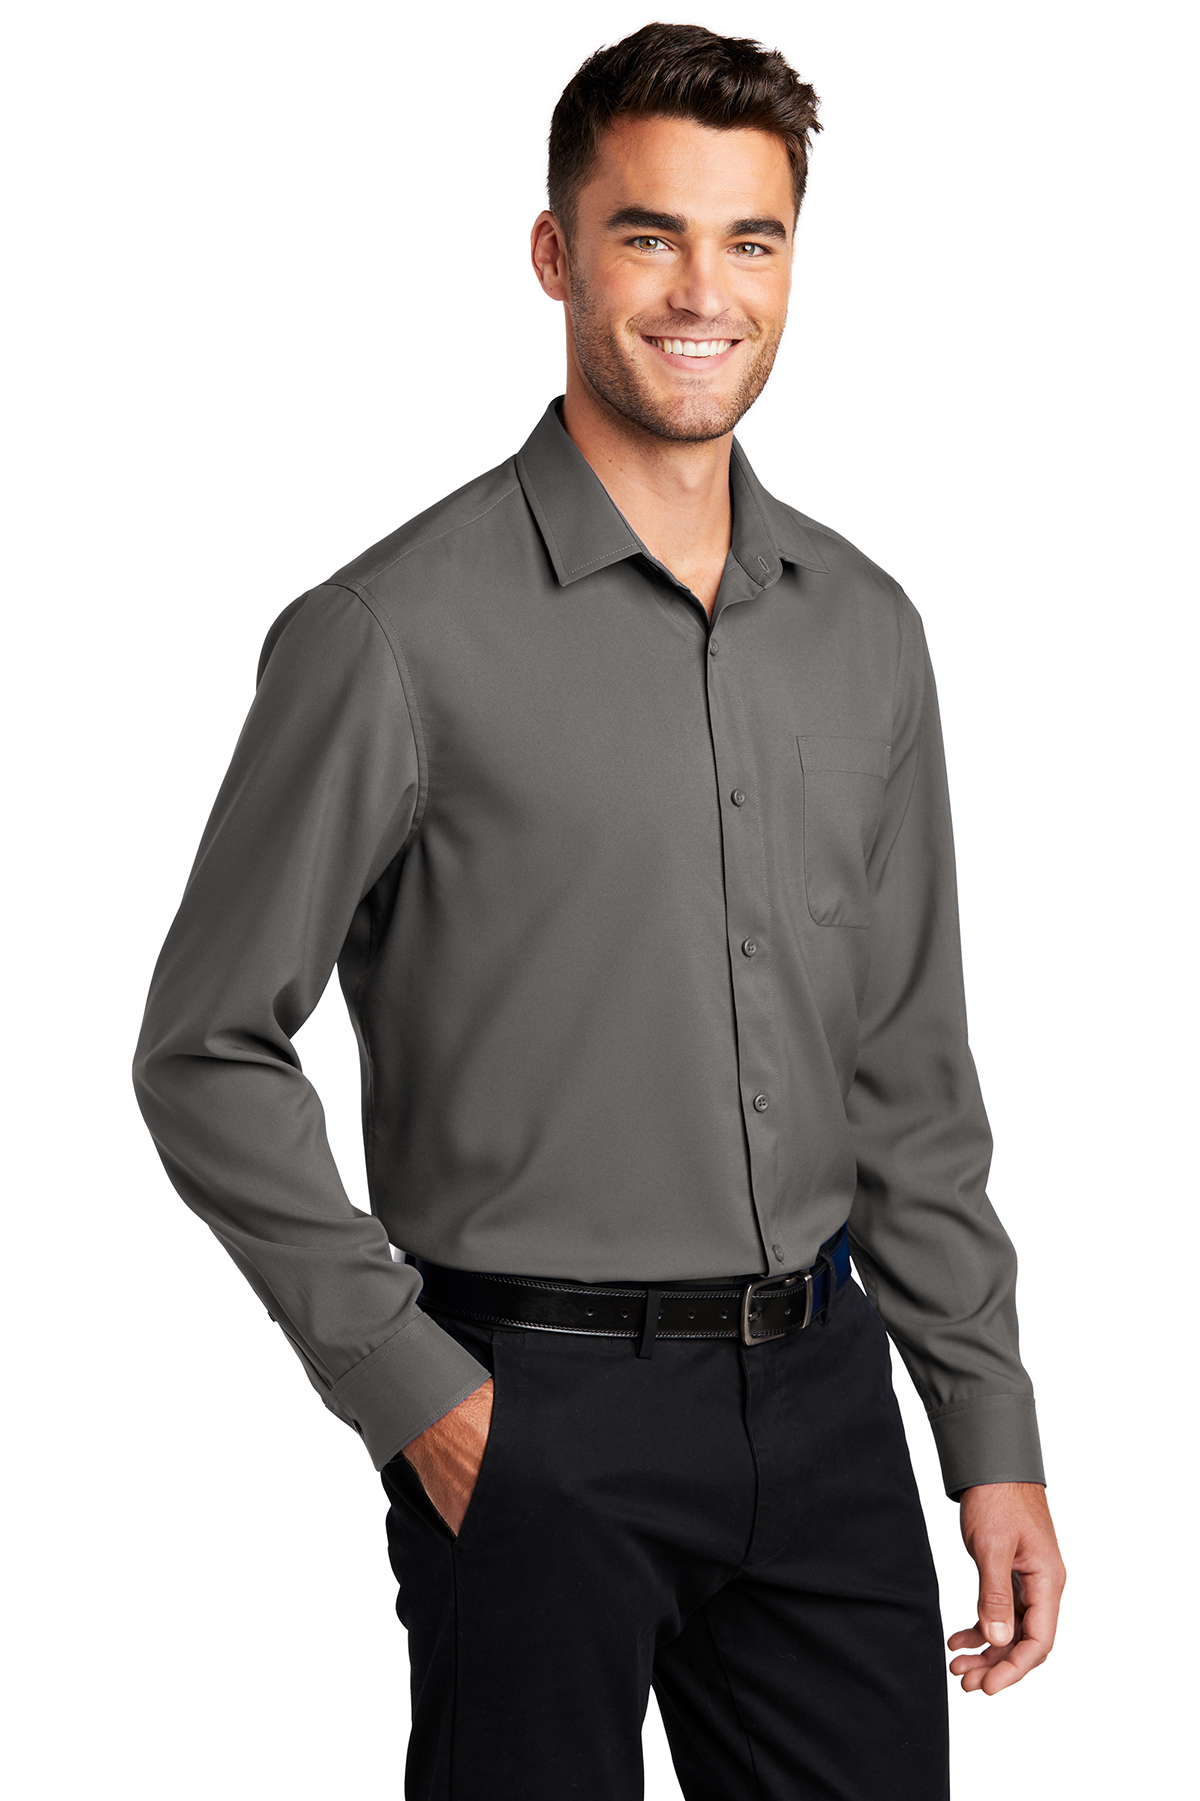 Port Authority Long Sleeve Performance Staff Shirt | Product | SanMar